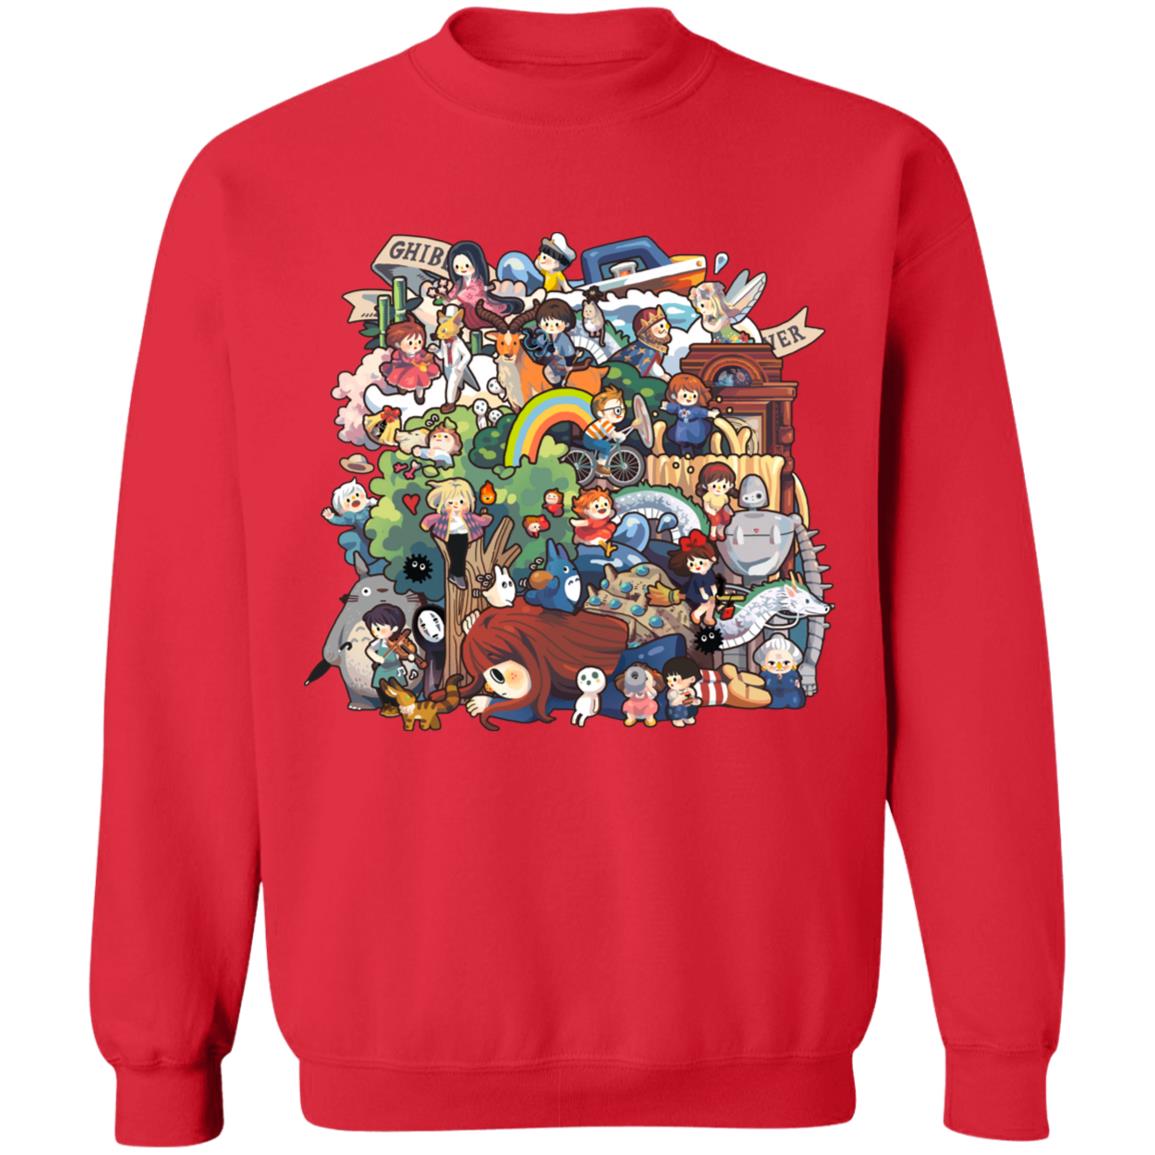 Ghibli Studio All Characters Sweatshirt